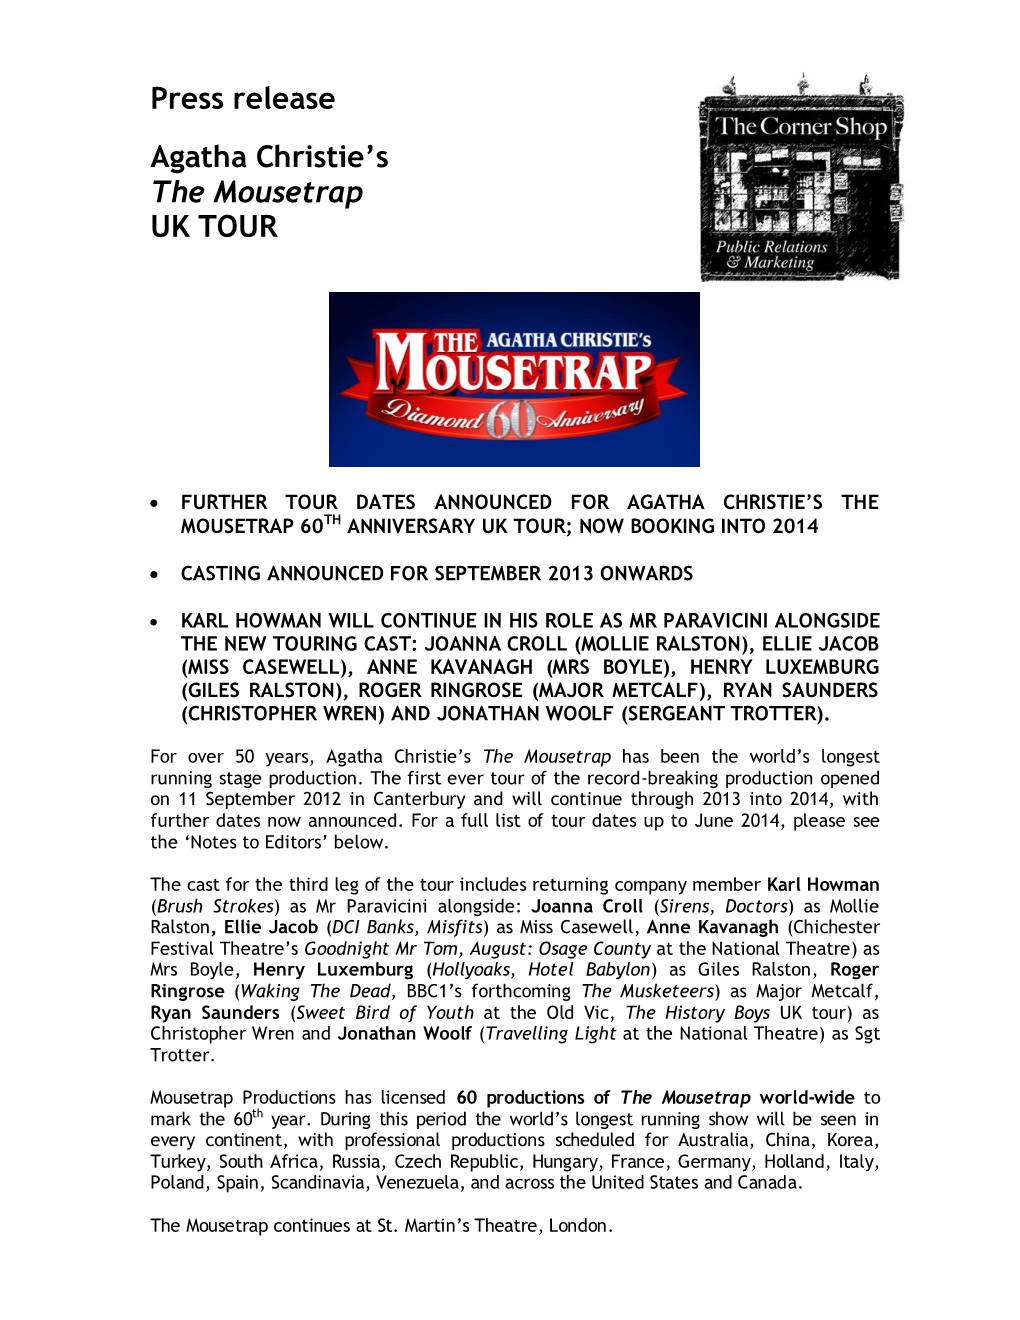 Press Release Agatha Christie's the Mousetrap UK TOUR